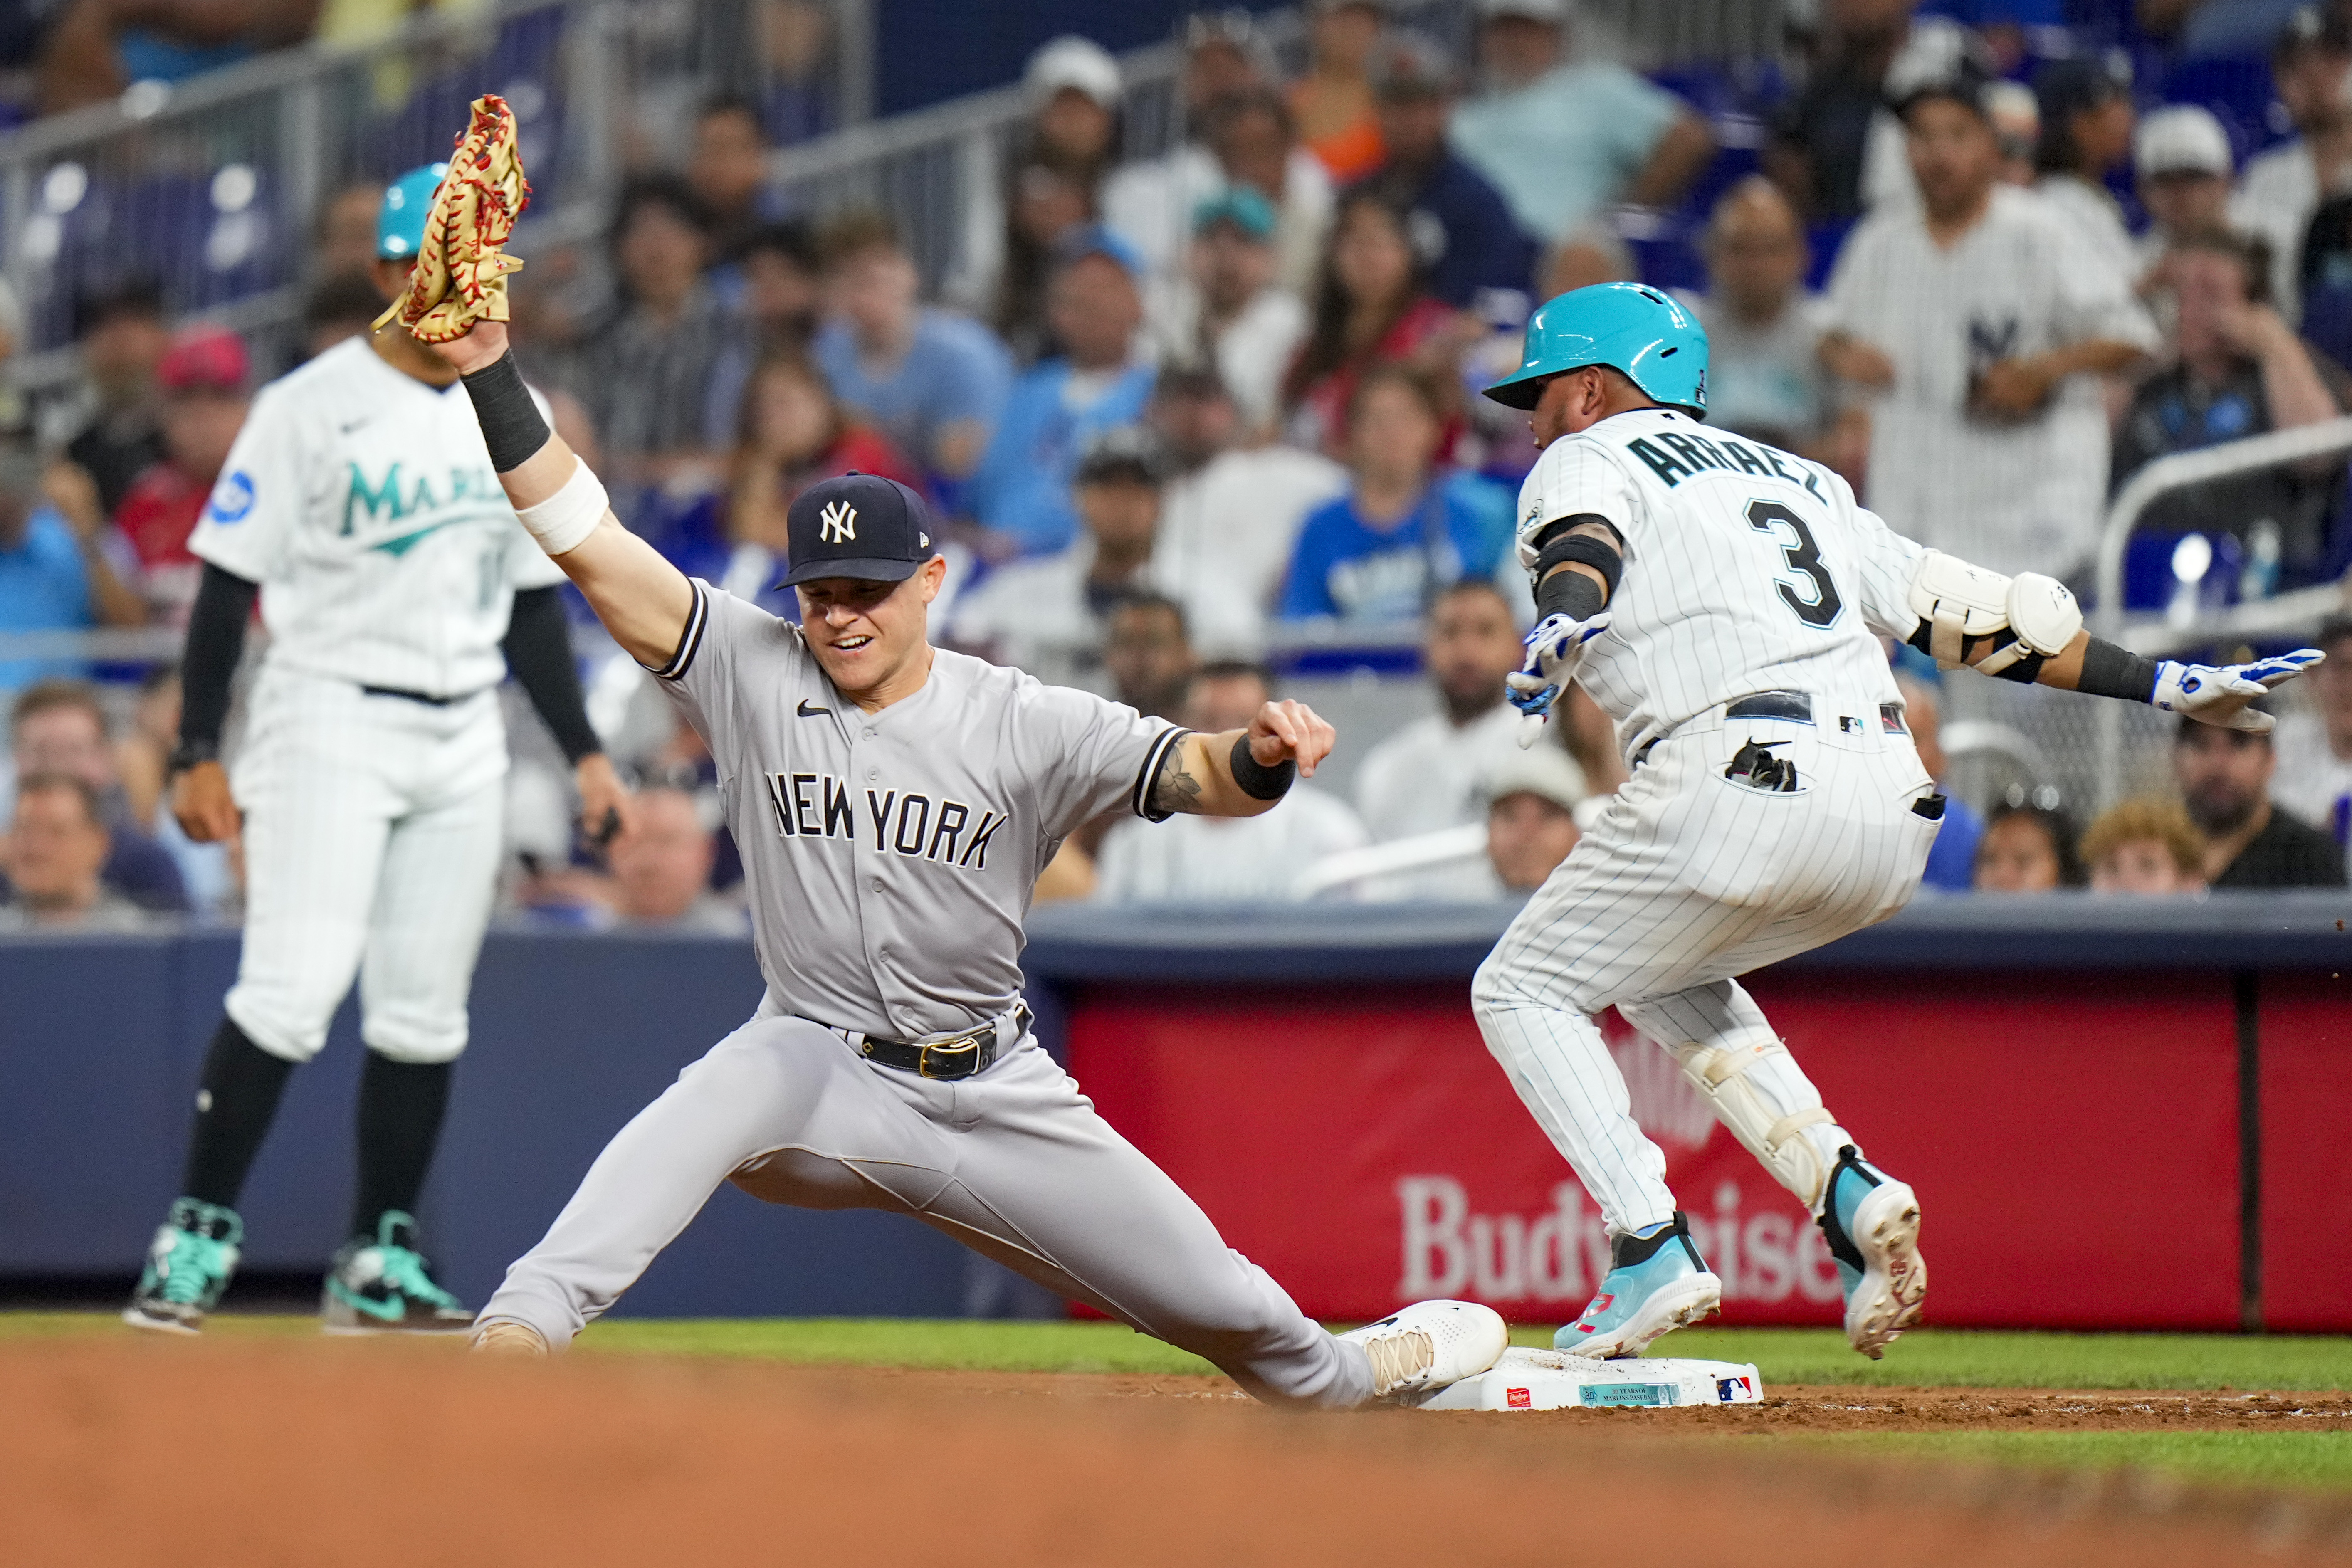 Yankees' Nestor Cortes on if Aaron Judge stays: 'He's the next